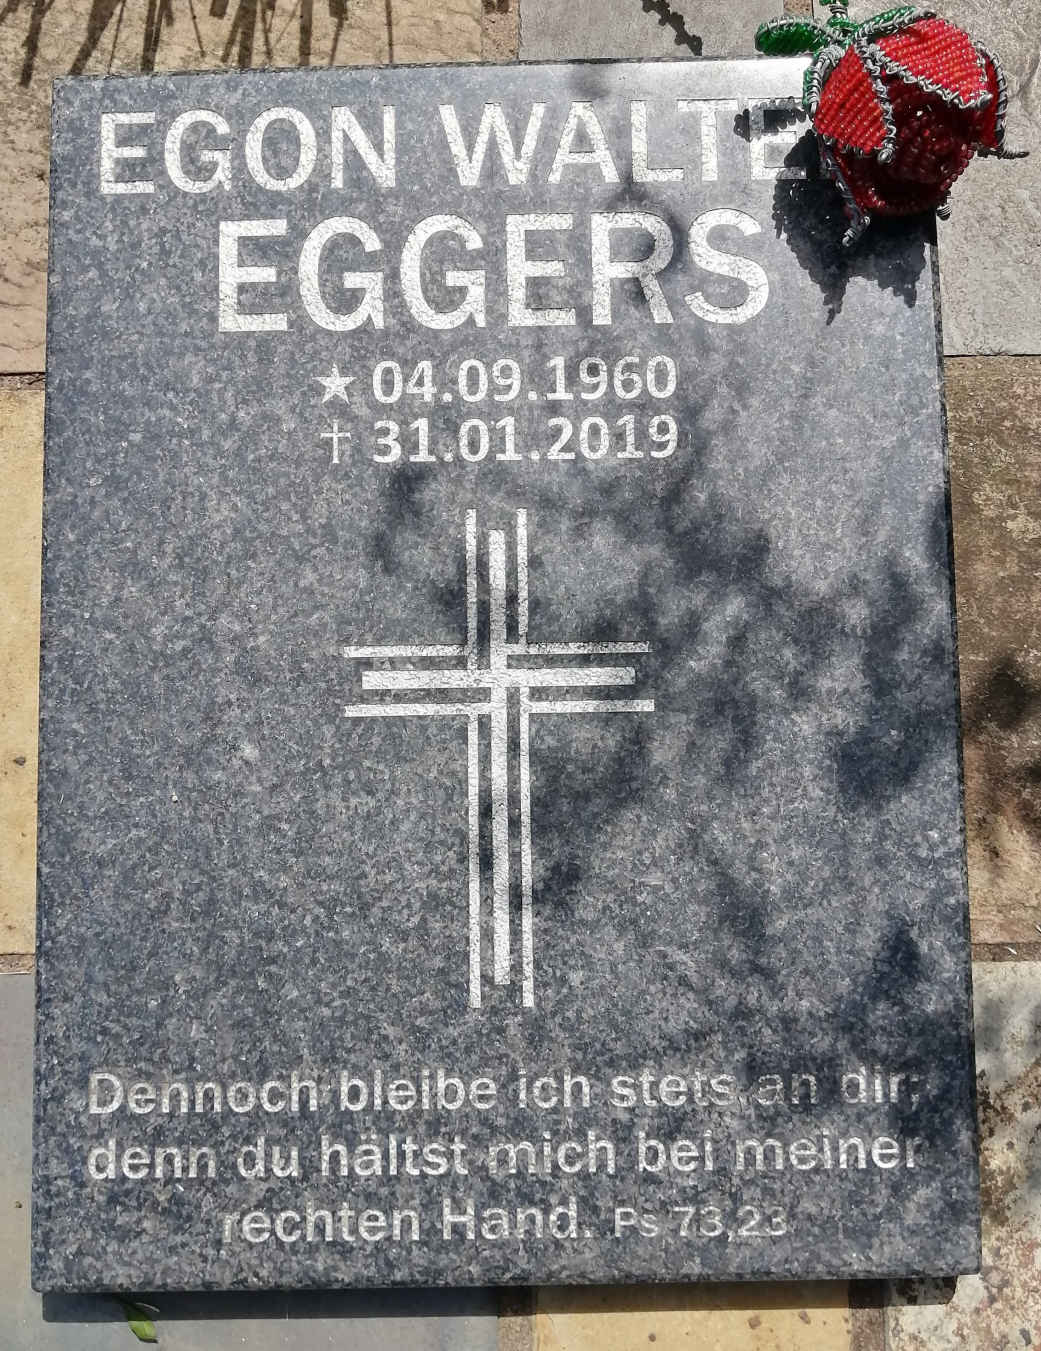 EGGERS Egon Walter 1960-2019